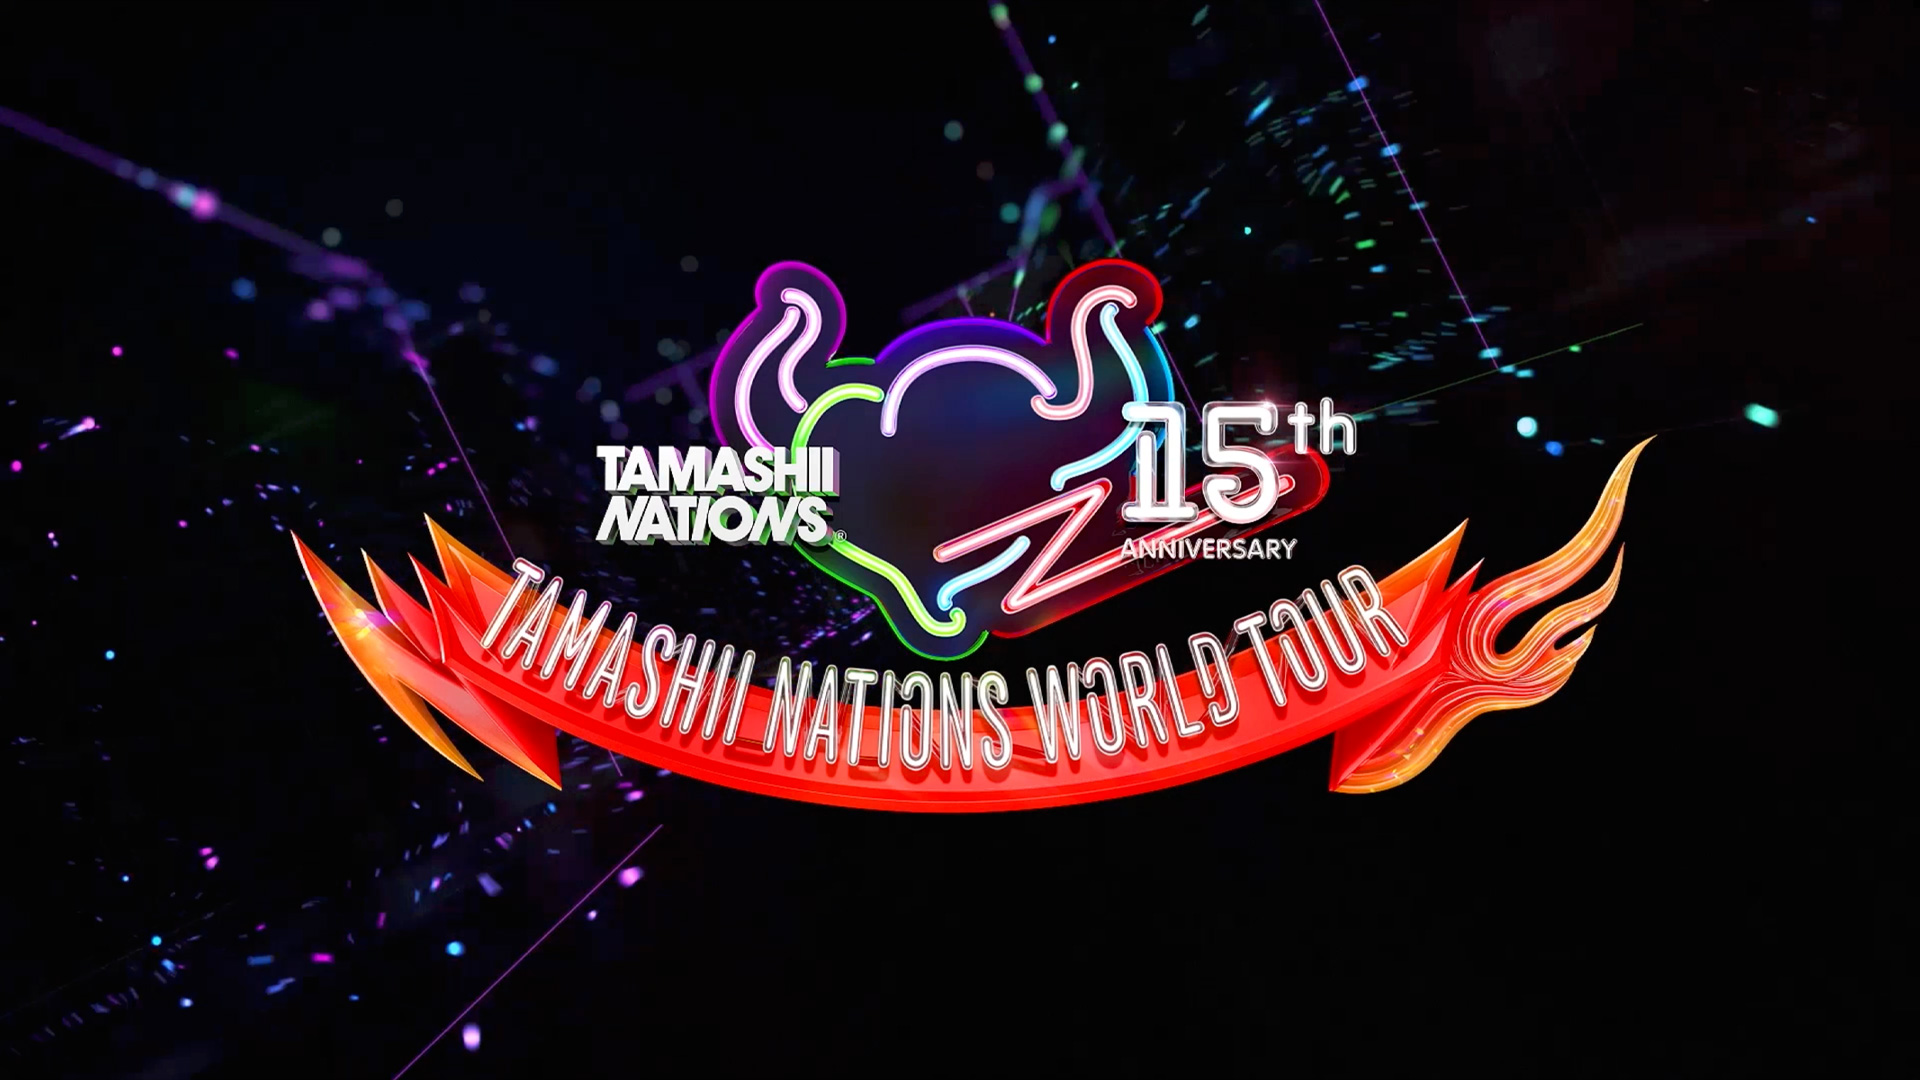 TAMASHII NATIONS WORLD TOUR -TAMASHII NATIONS 15th ANNIVERSARY